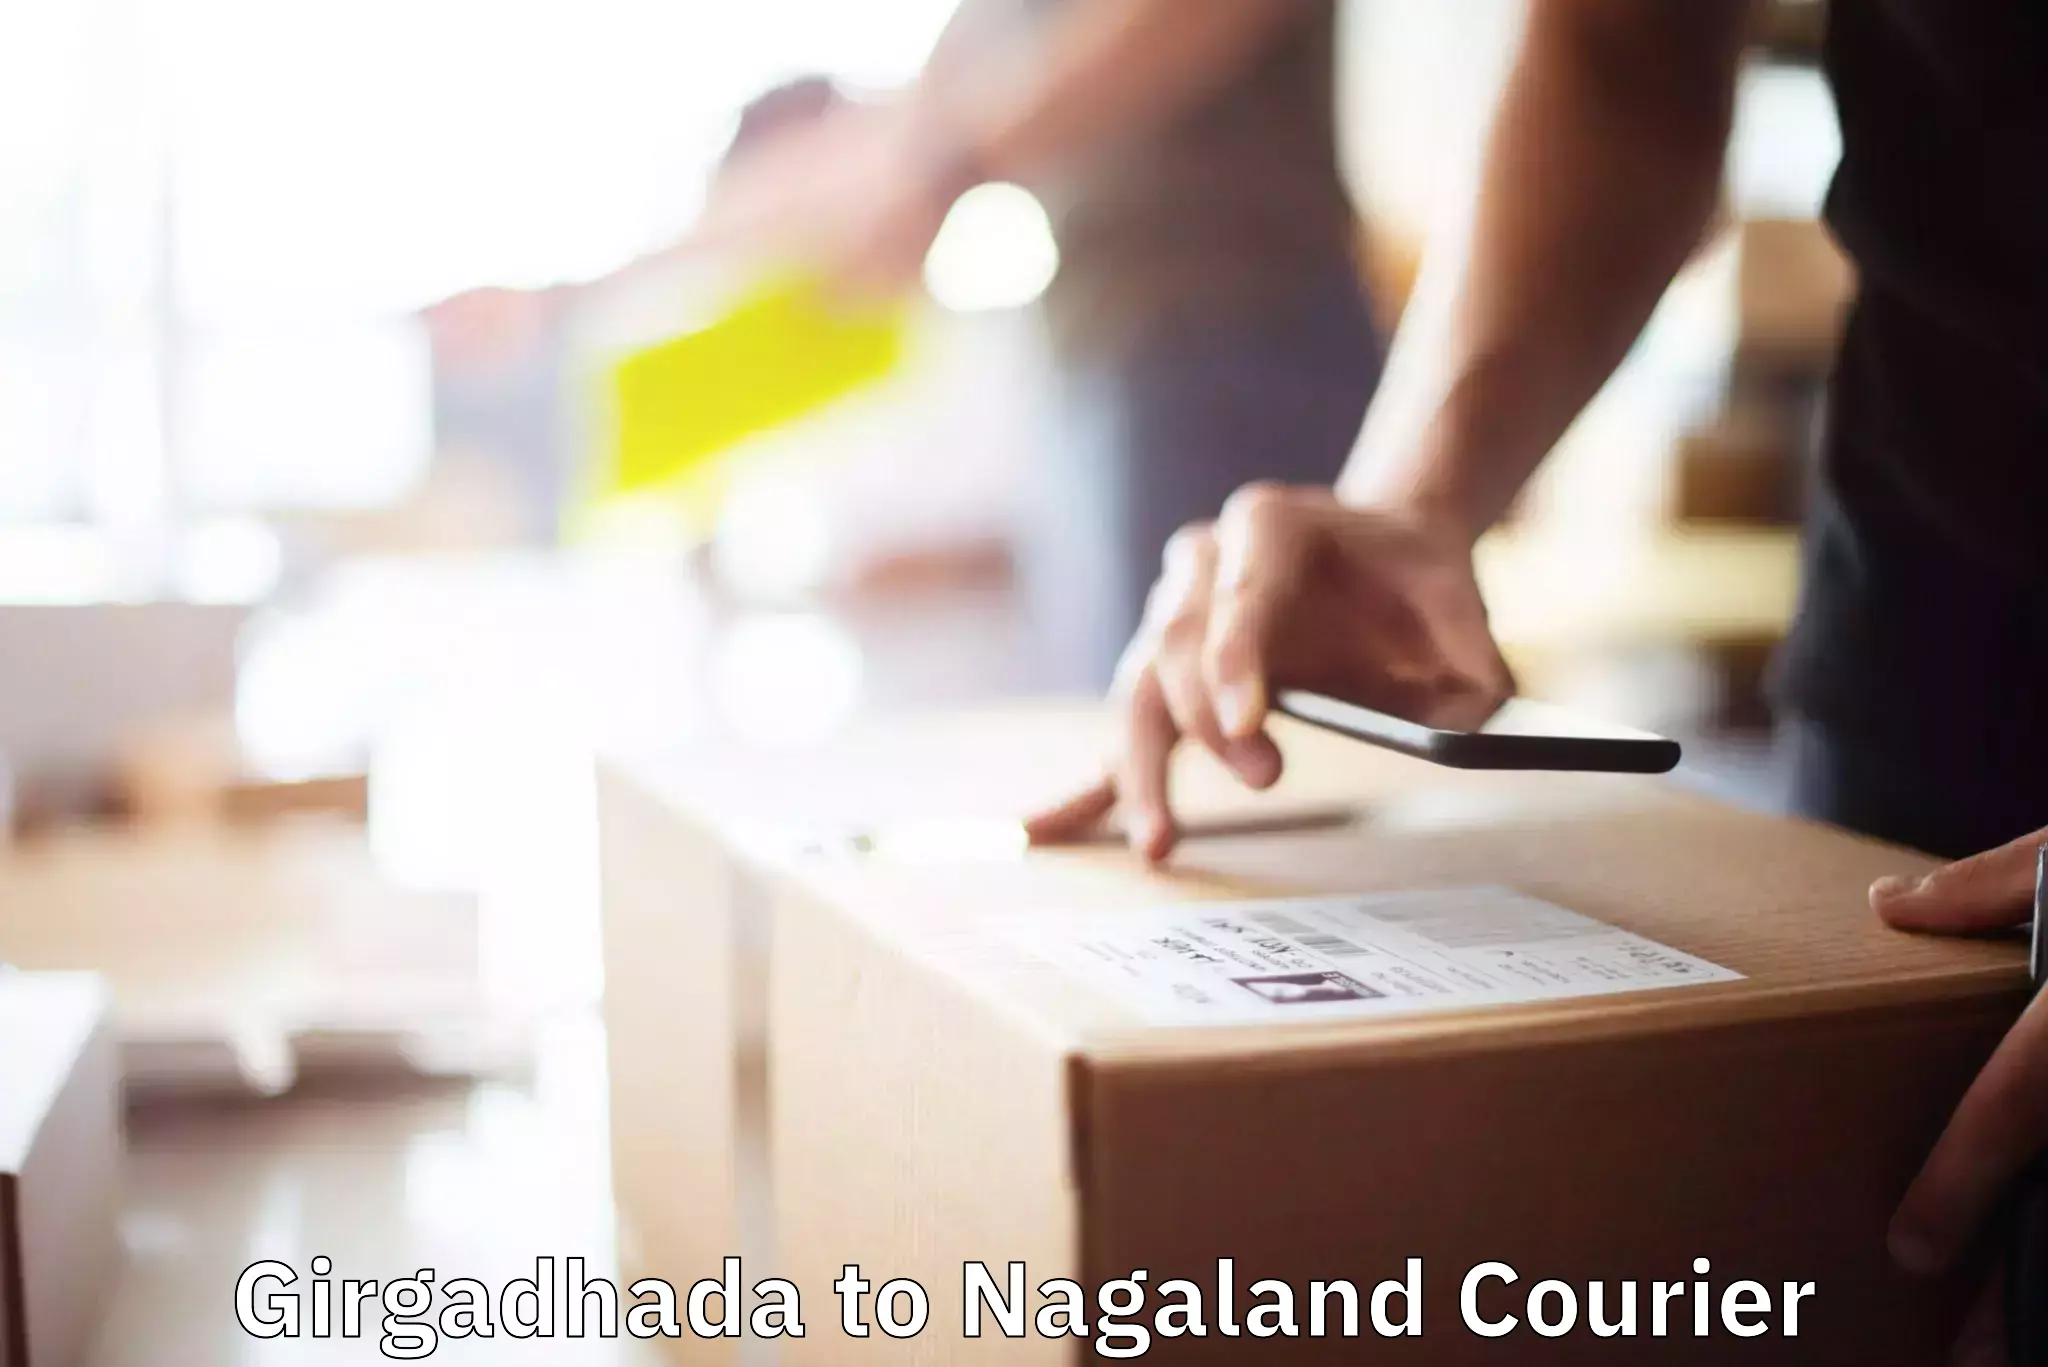 Affordable household movers Girgadhada to Nagaland